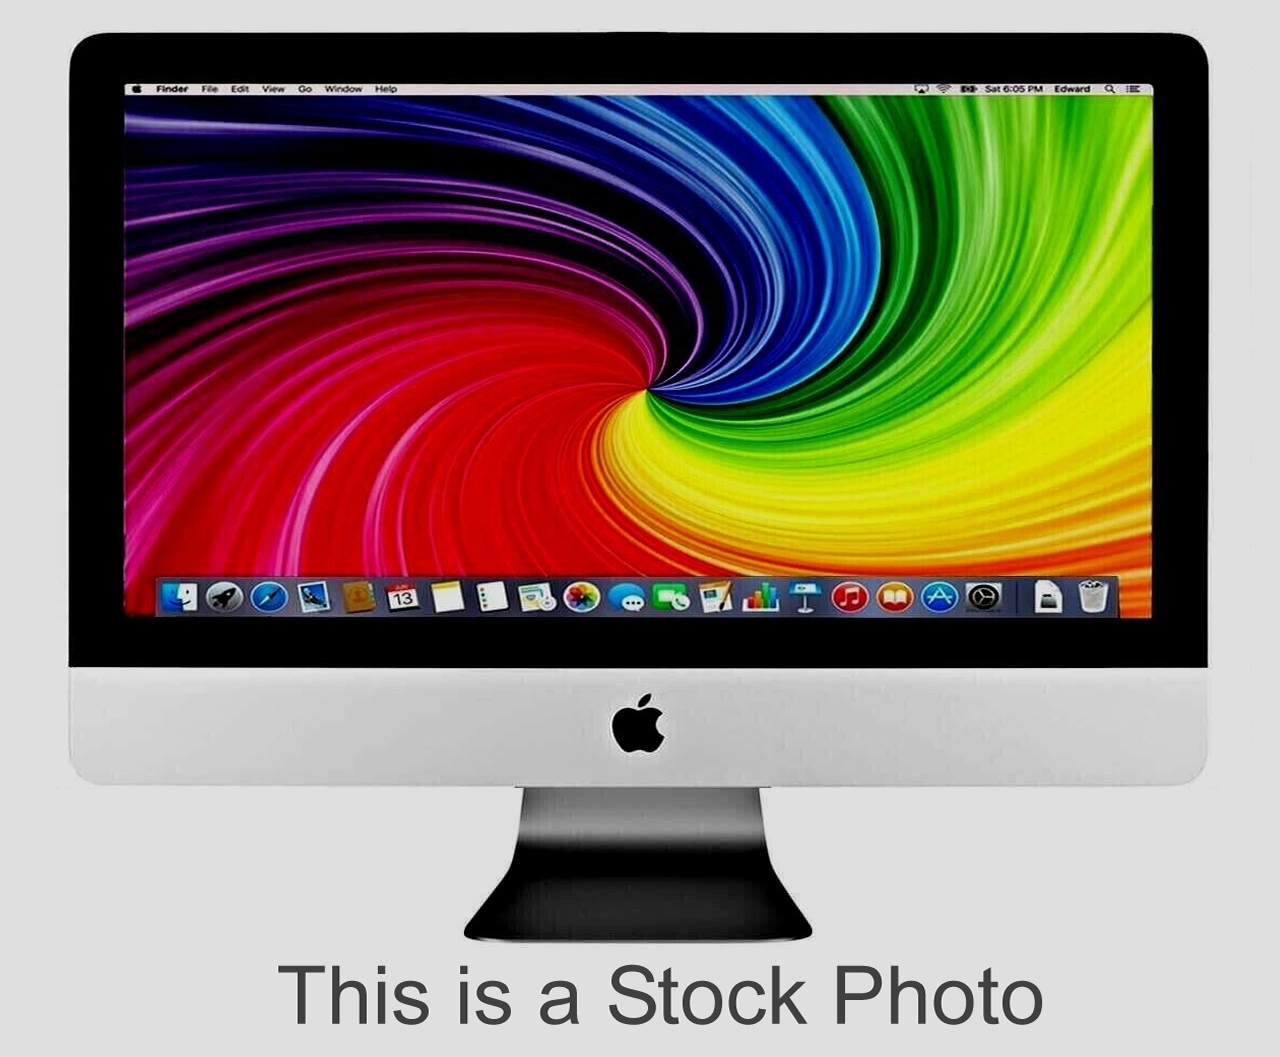 iMac Stock photo from ComputerPro2000